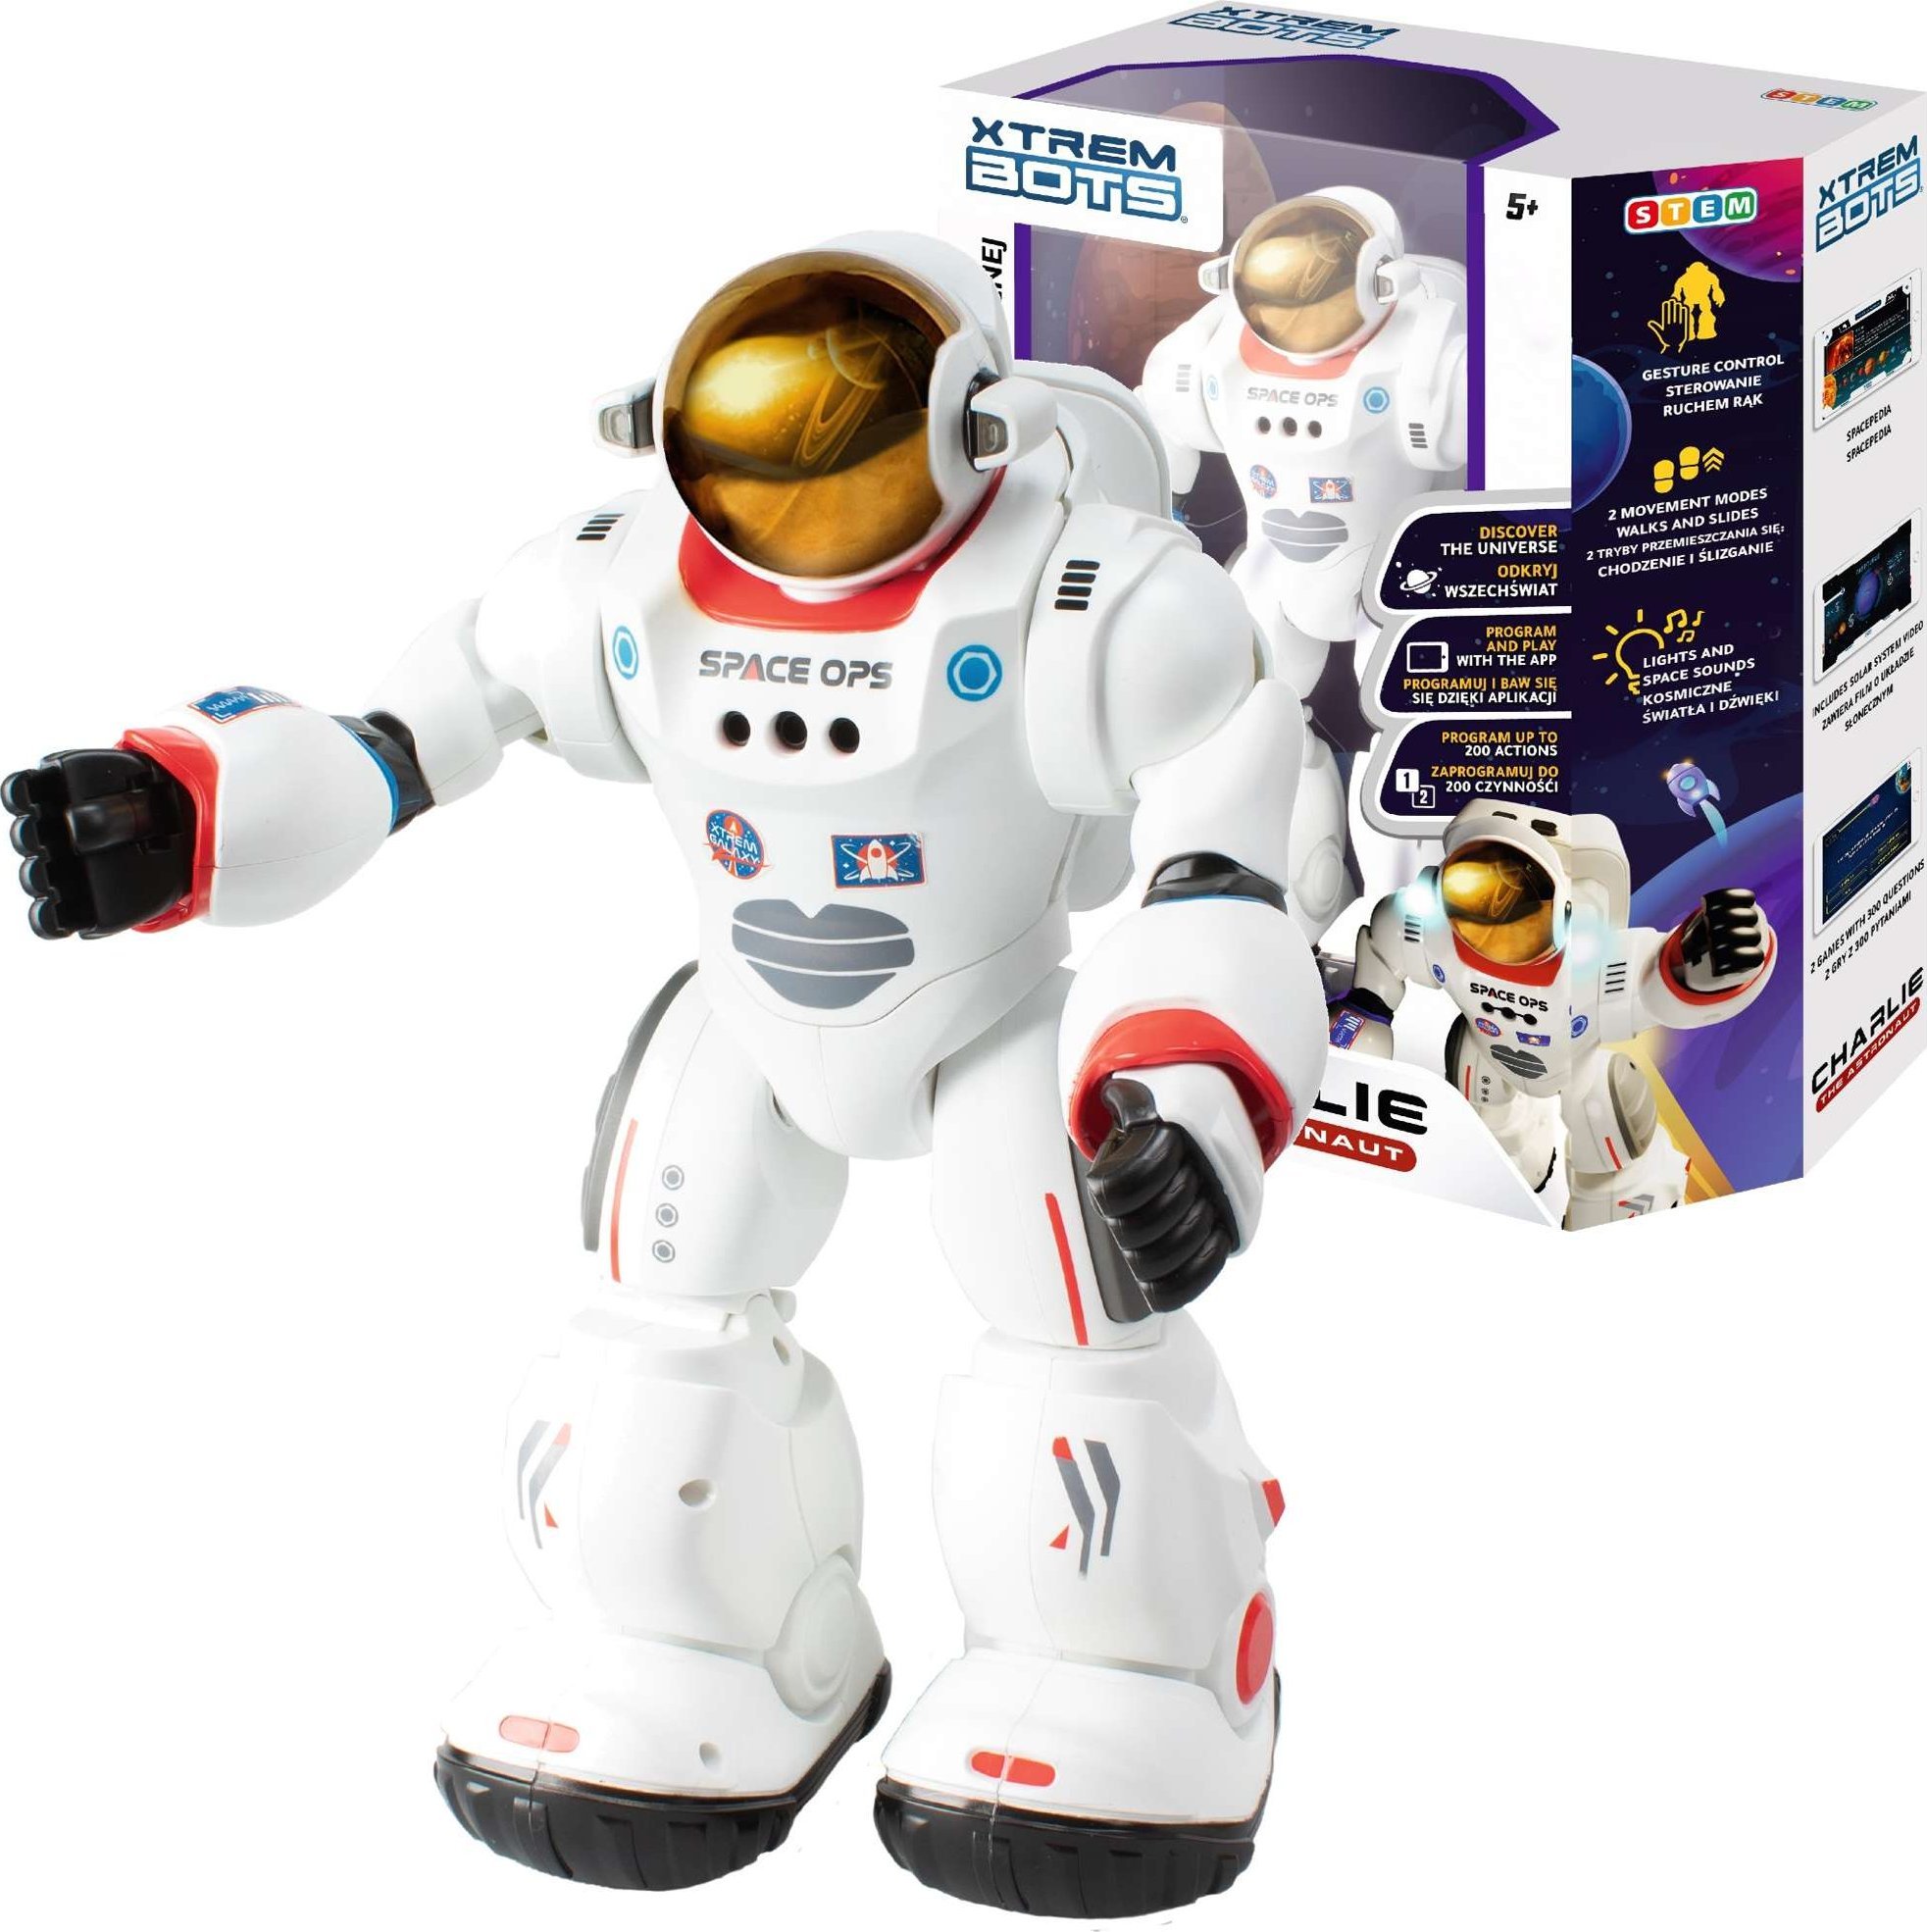 Tm Toys Robot Charlie the Astronaut 8436598031584 (8436598031584)